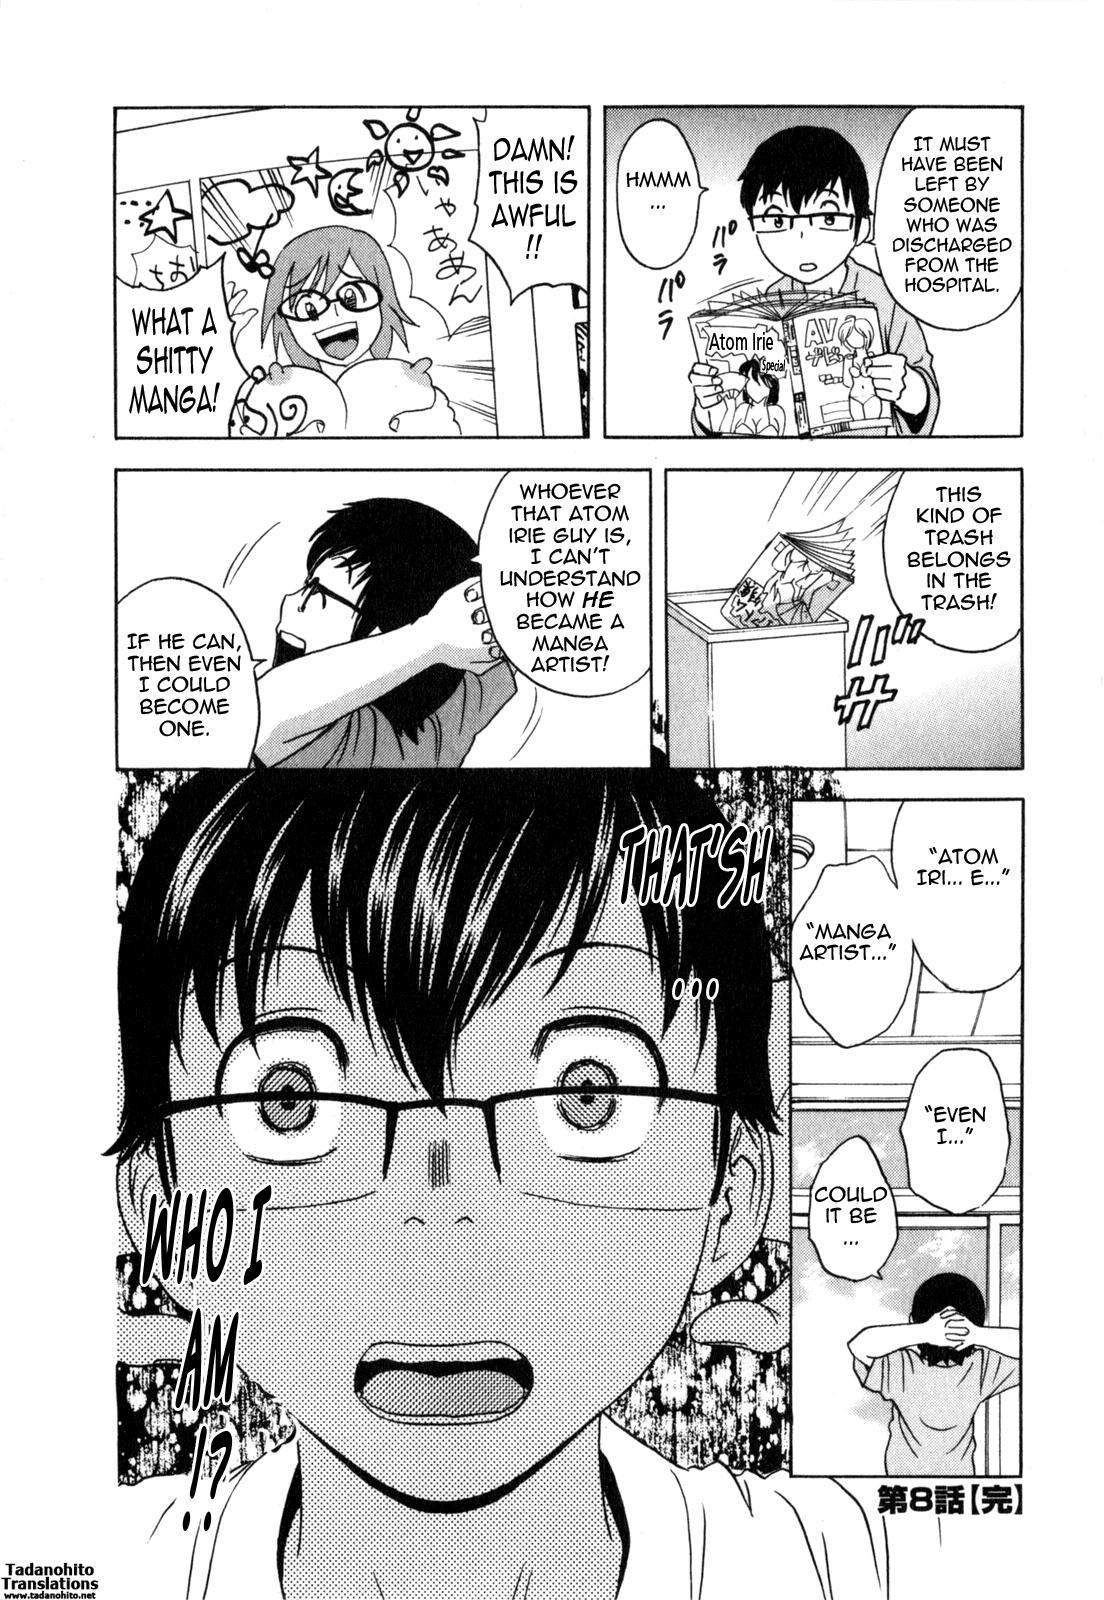 [Hidemaru] Life with Married Women Just Like a Manga 3 - Ch. 1-8 [English] {Tadanohito} 164